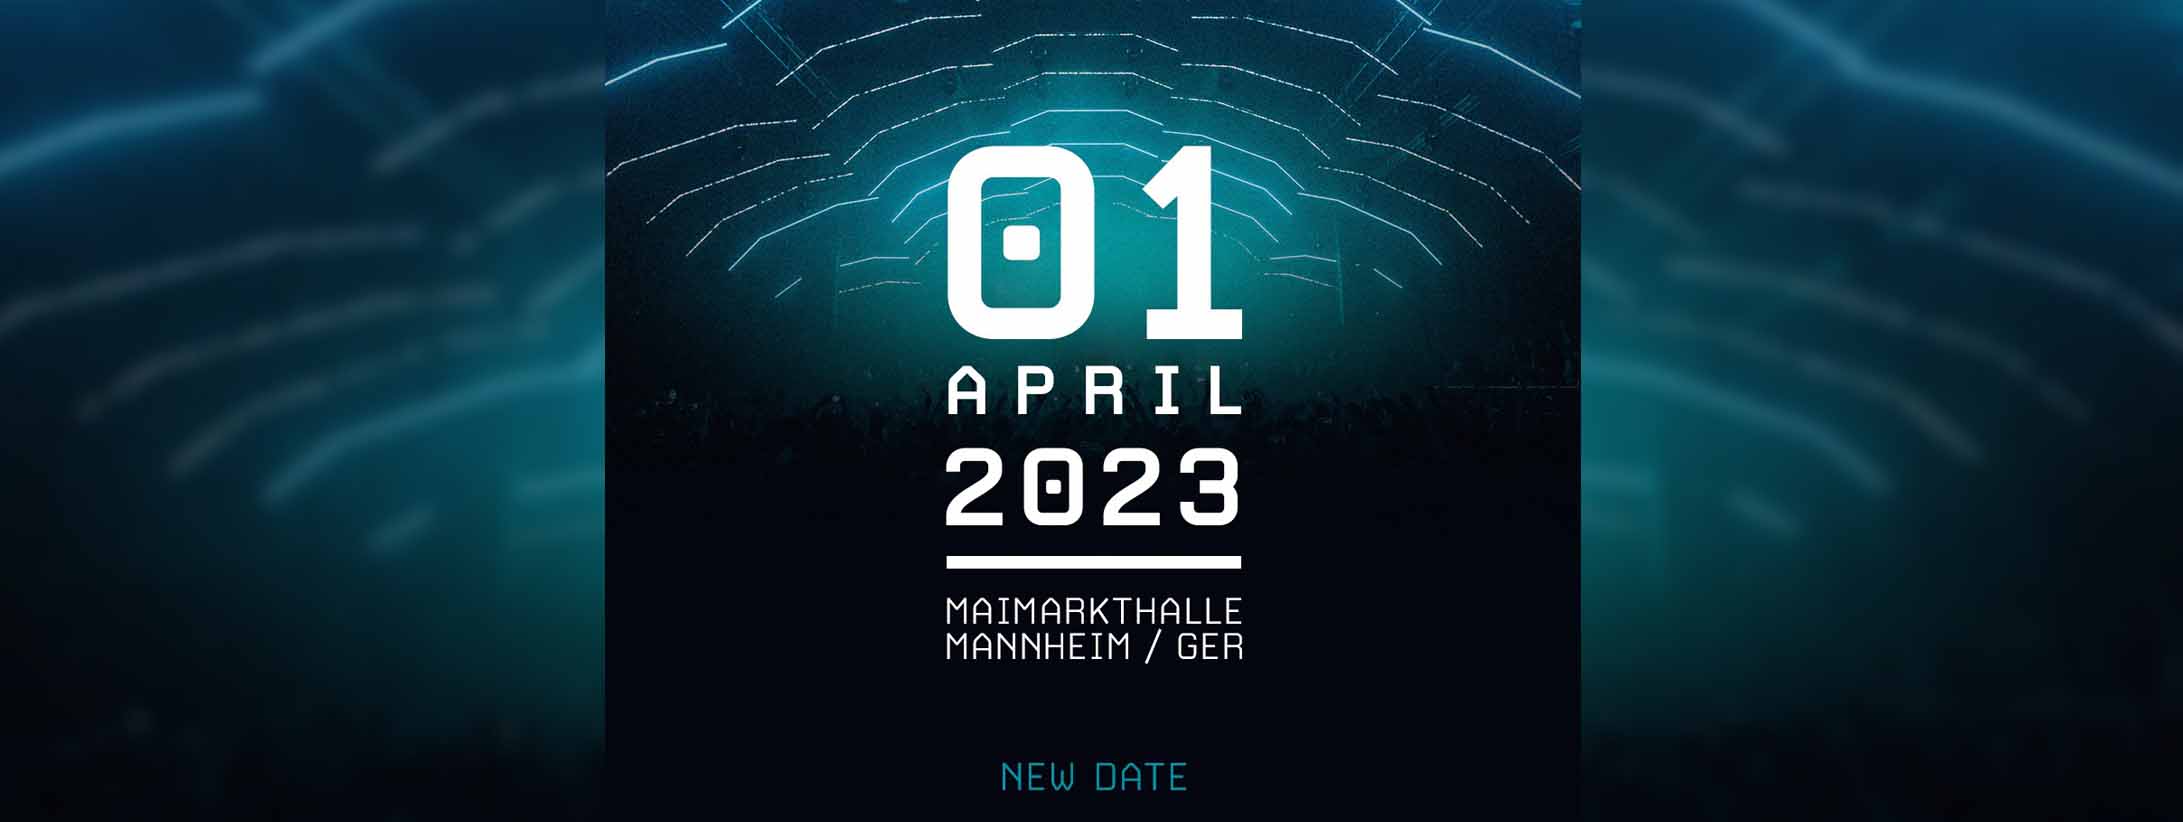 time warp festival 2023 Mannheim germania